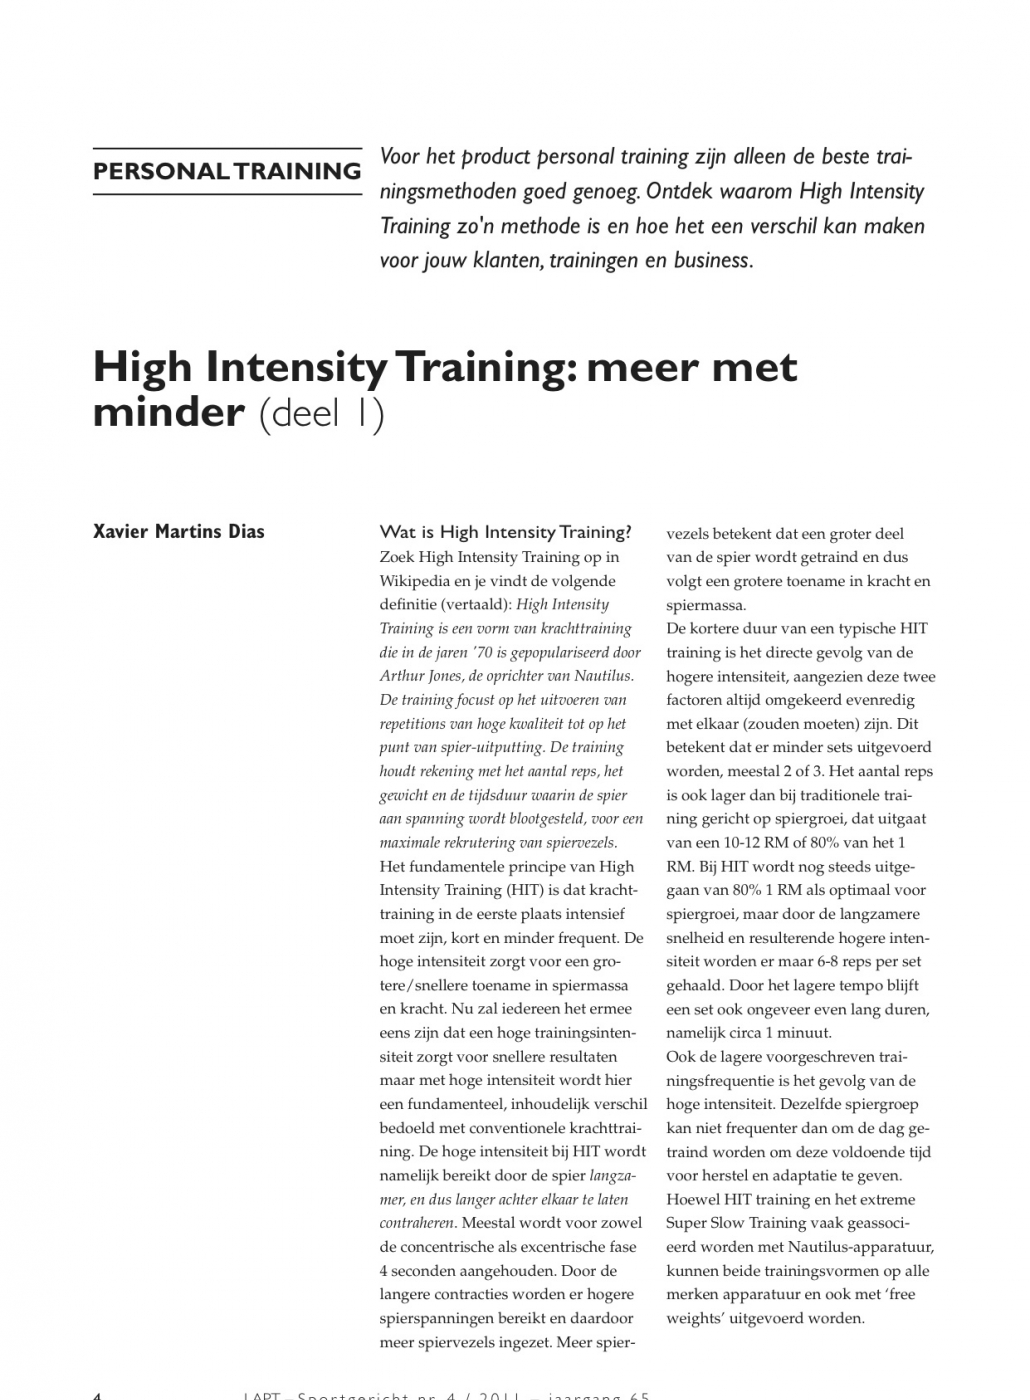 High intensity training: meer met minder (deel 1)